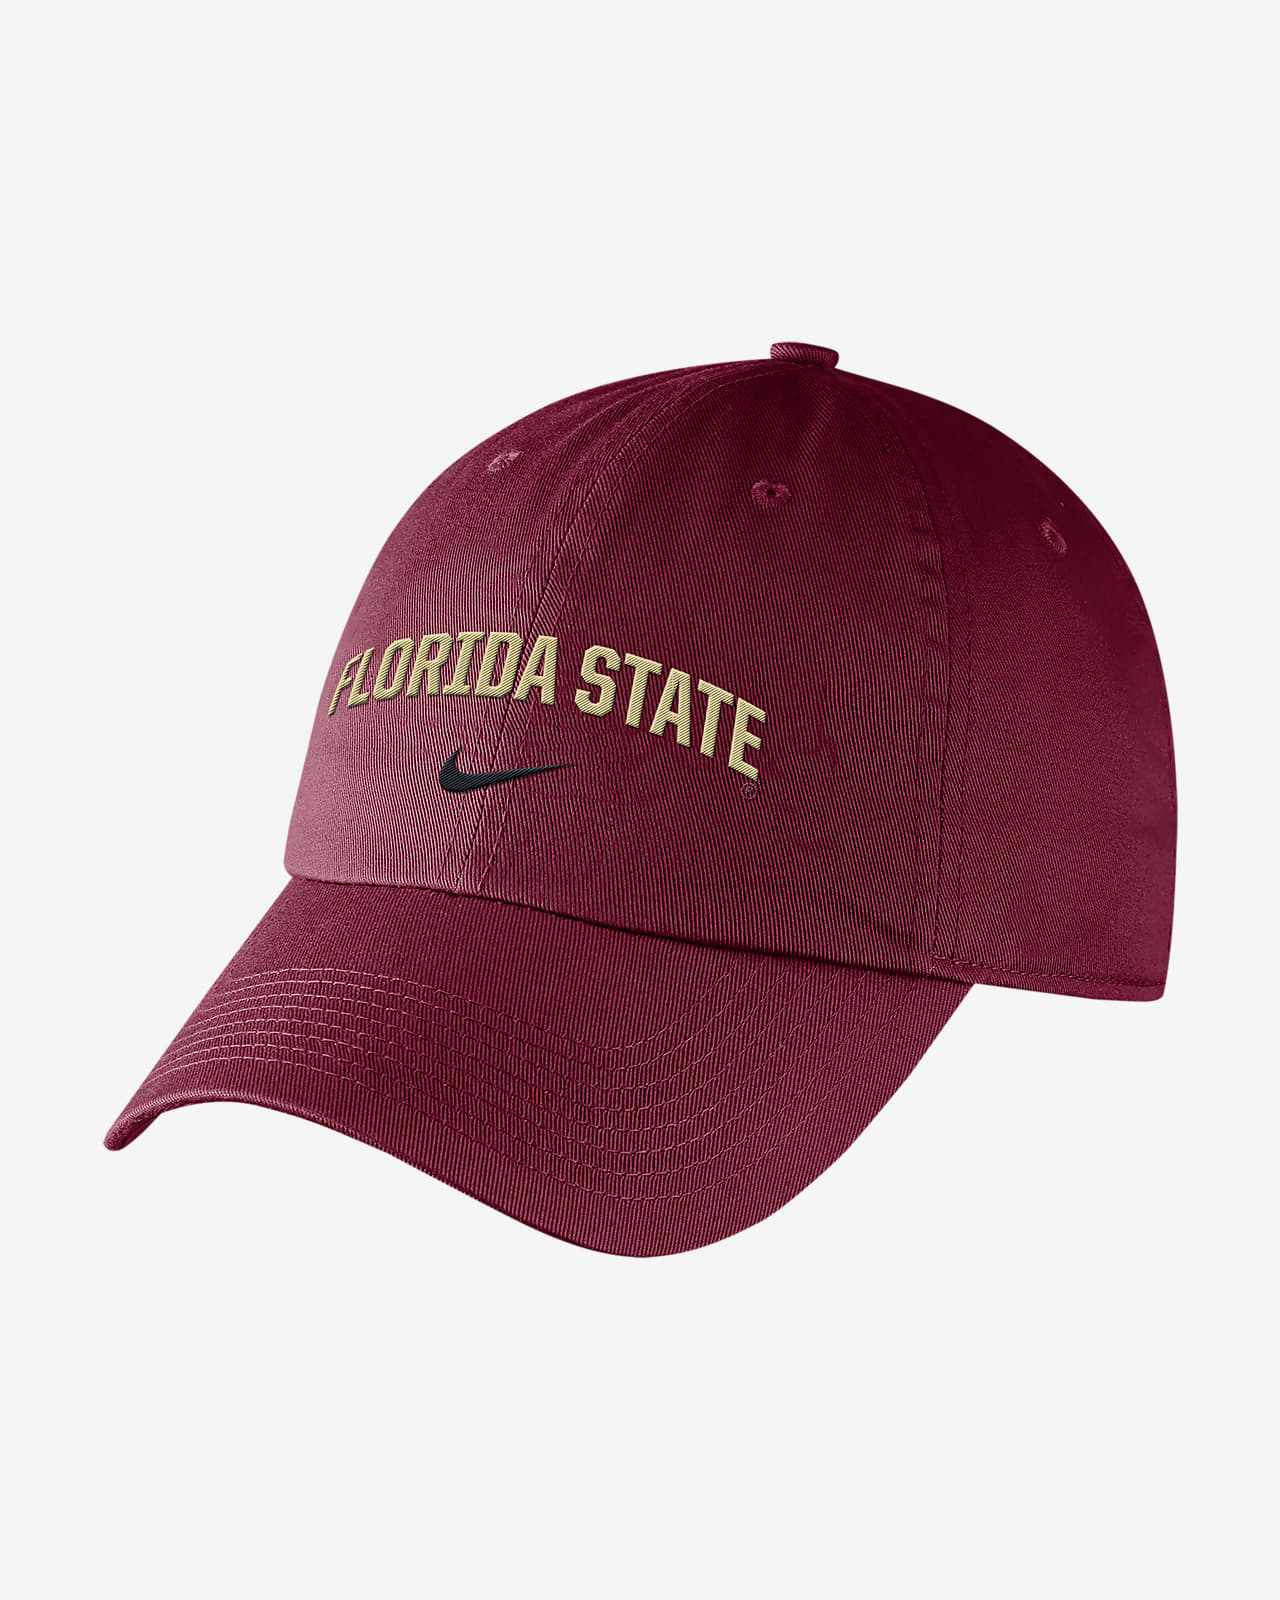 Nike College (Florida State) Hat